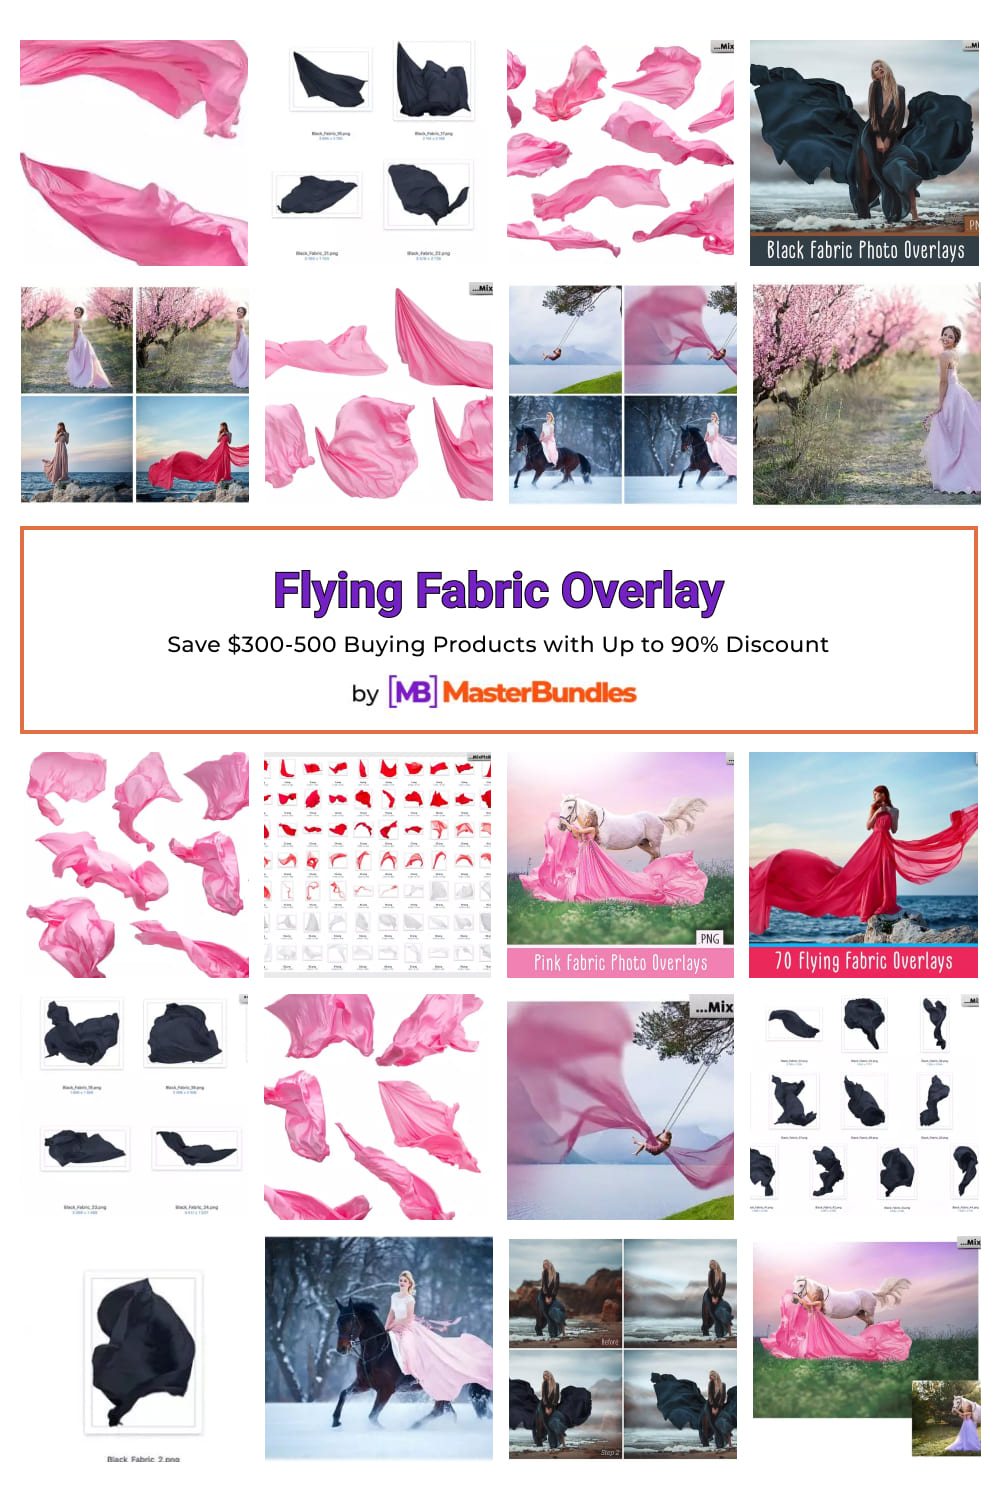 Flying Fabric Overlay Pinterest image.